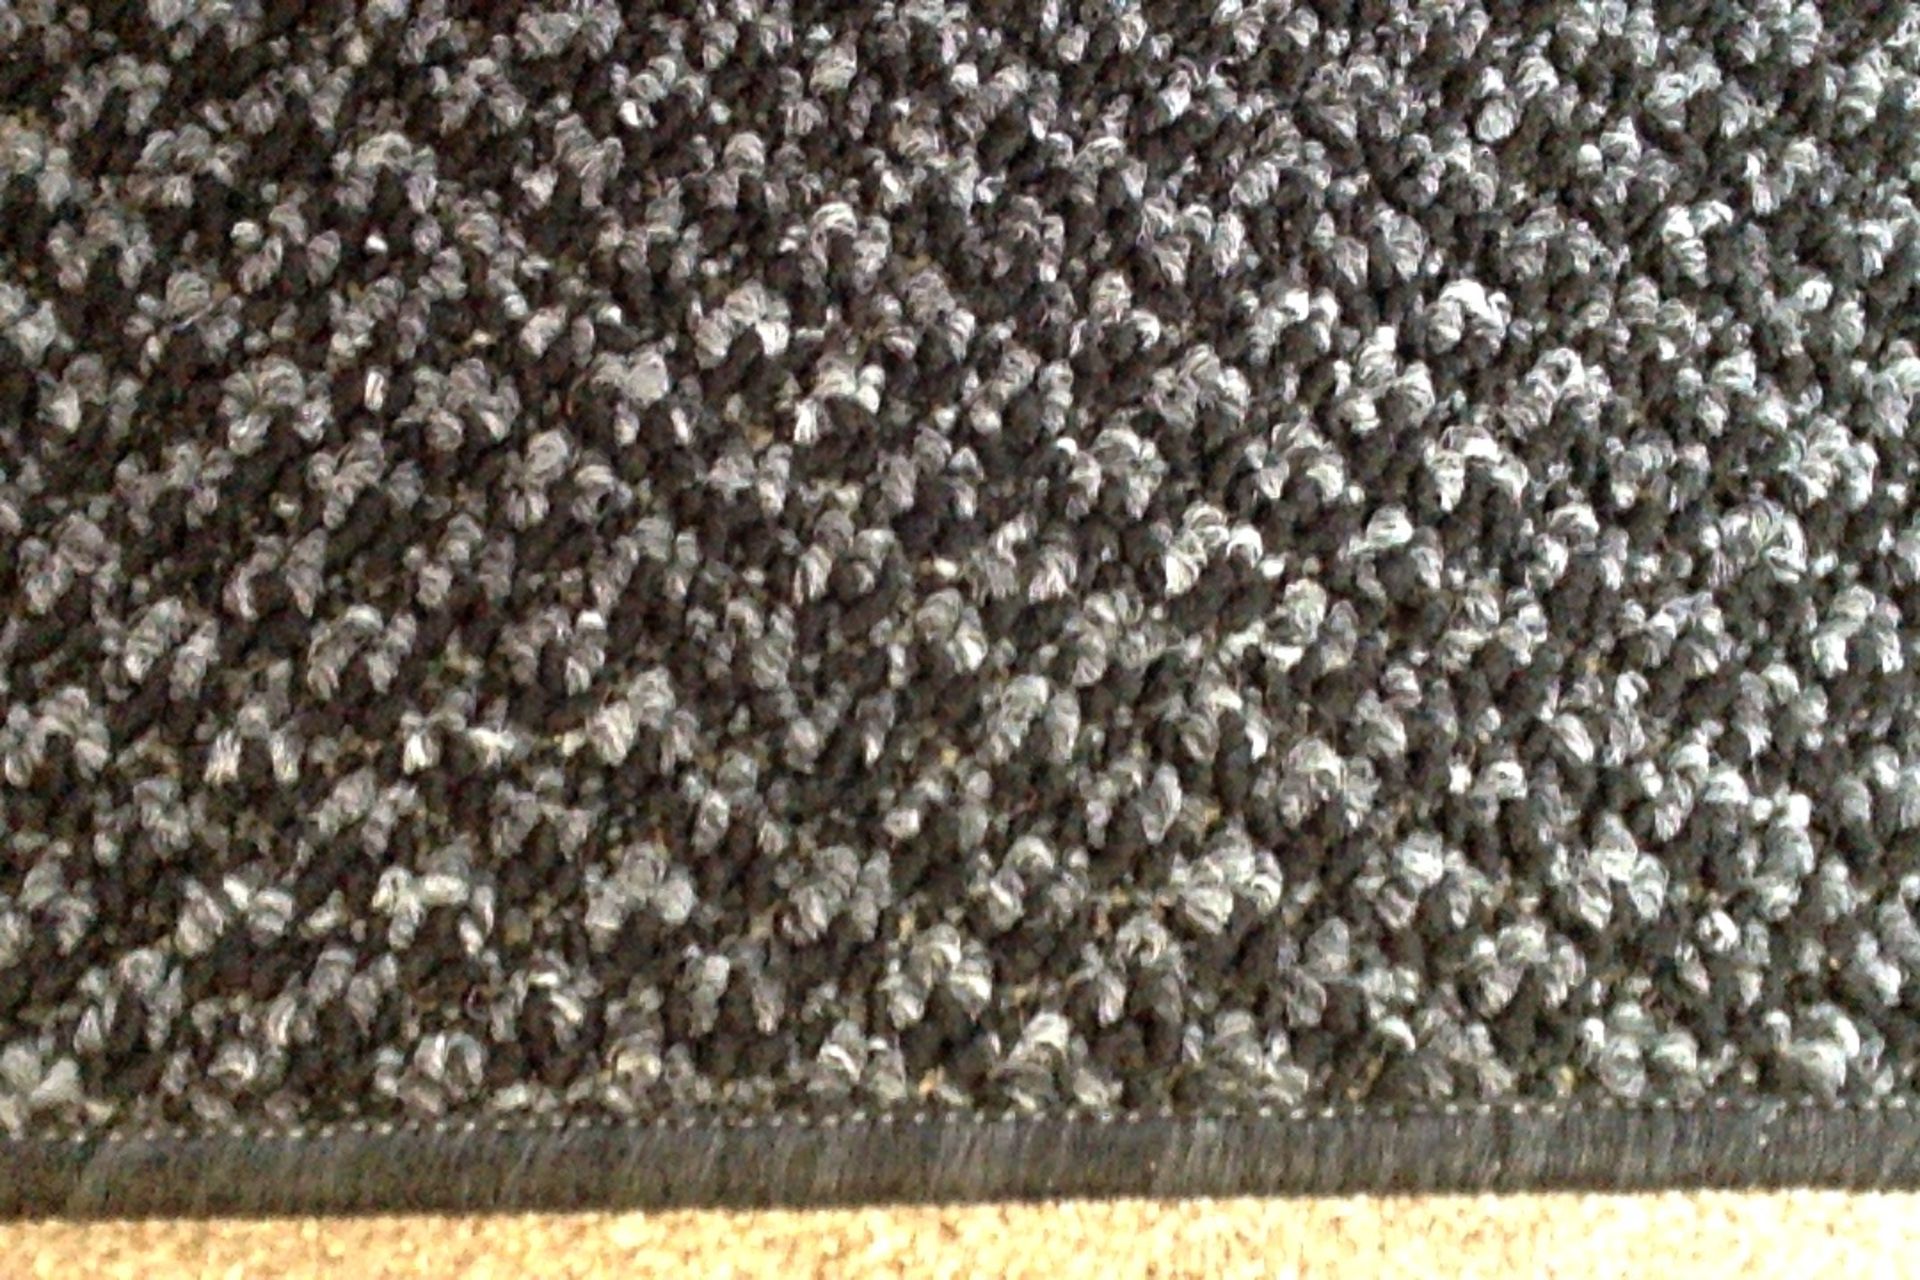 Landlord's Special Heavy Duty Carpet - Black Heavy duty economy carpeting.   17.5x4m - Total 70m2